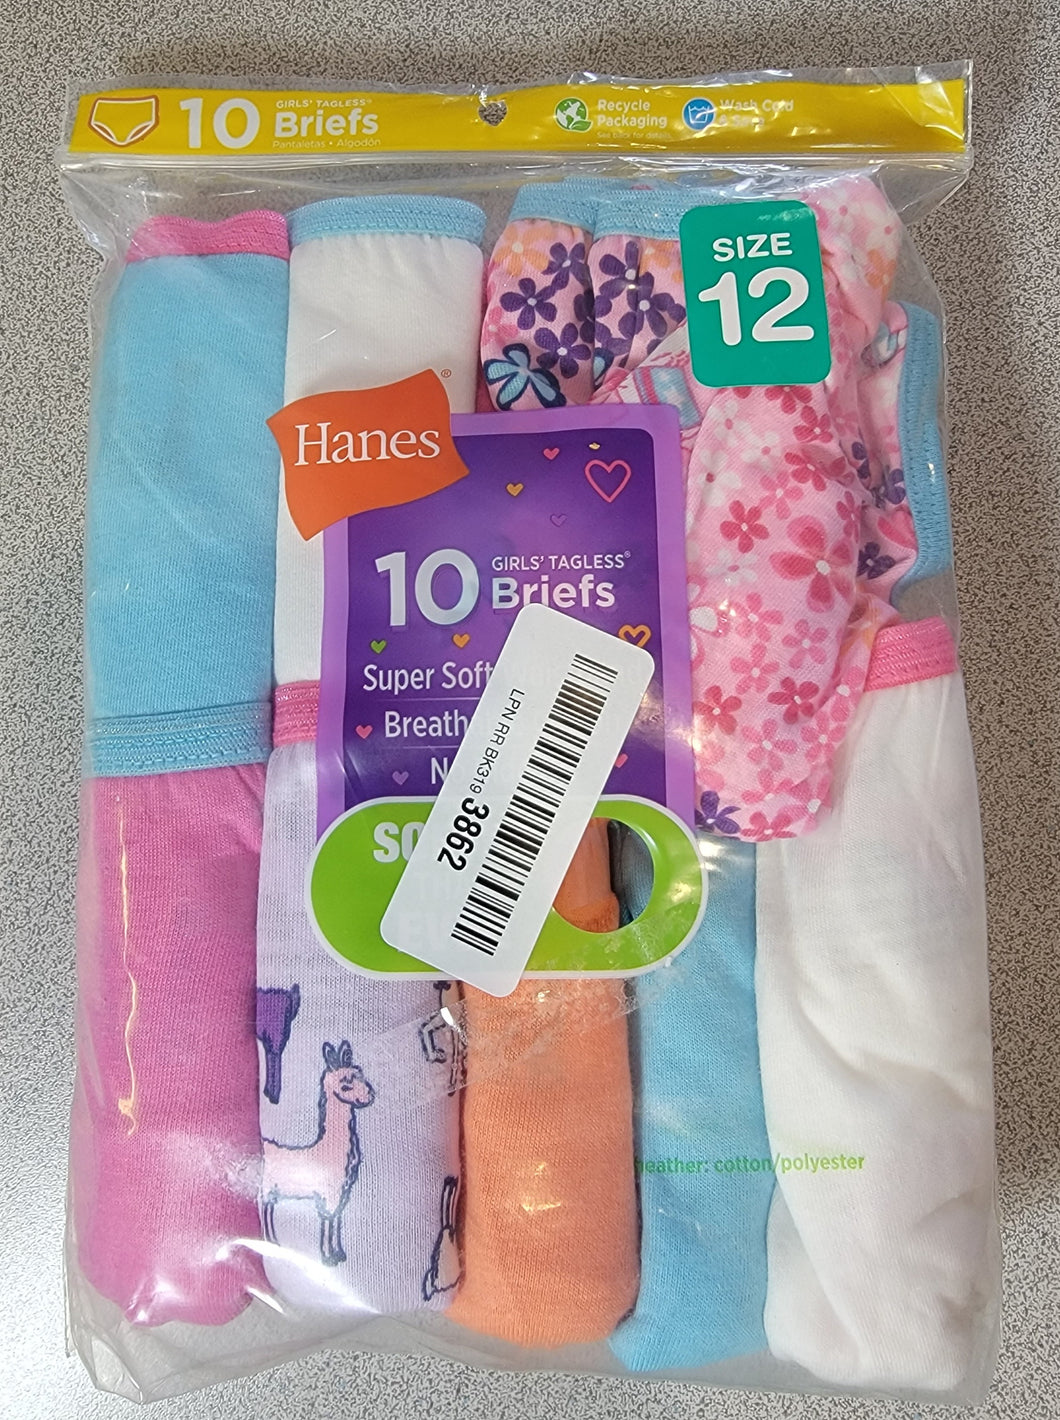 Hanes Girls Soft Tagless Briefs - Size 12, 10 Pack